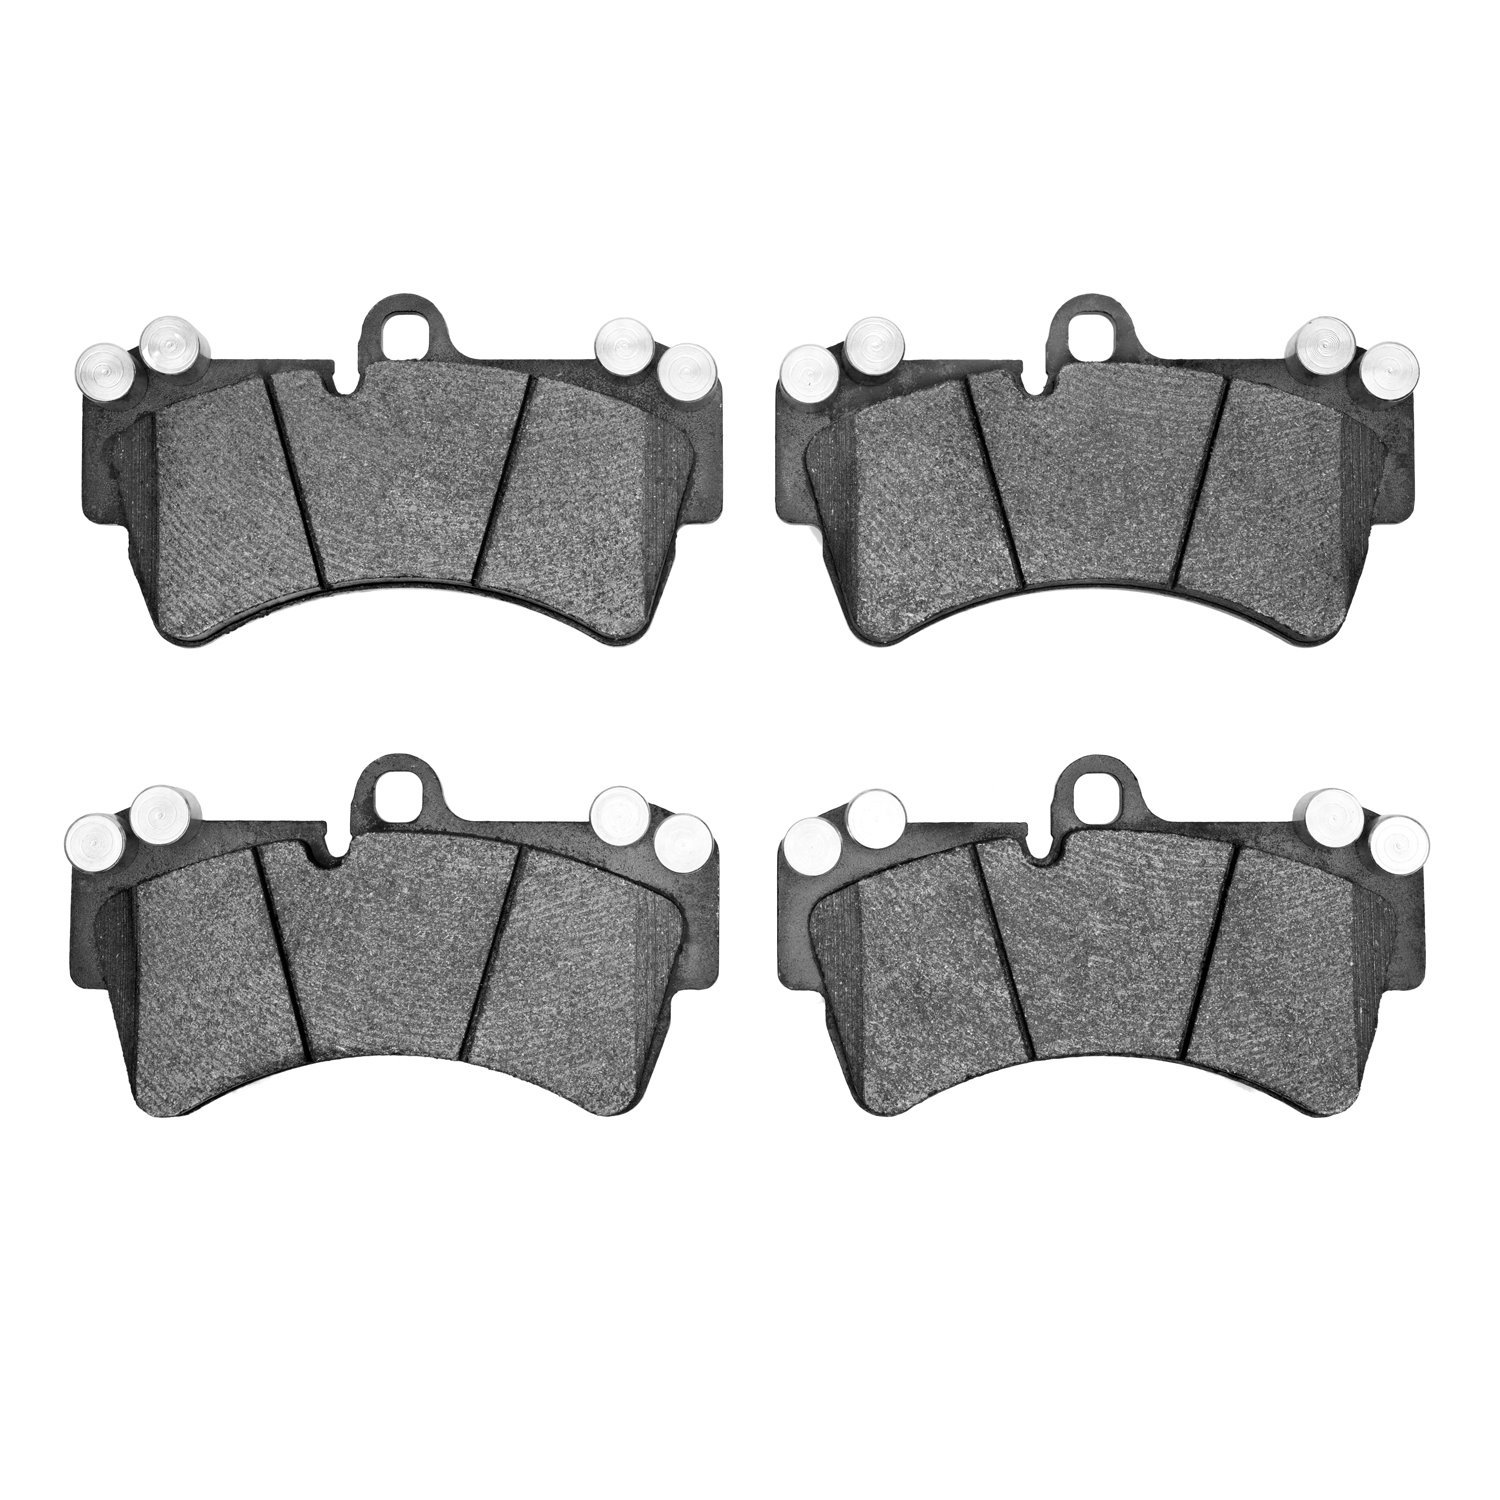 1000-0977-00 Track/Street Low-Metallic Brake Pads Kit, 2003-2015 Multiple Makes/Models, Position: Front